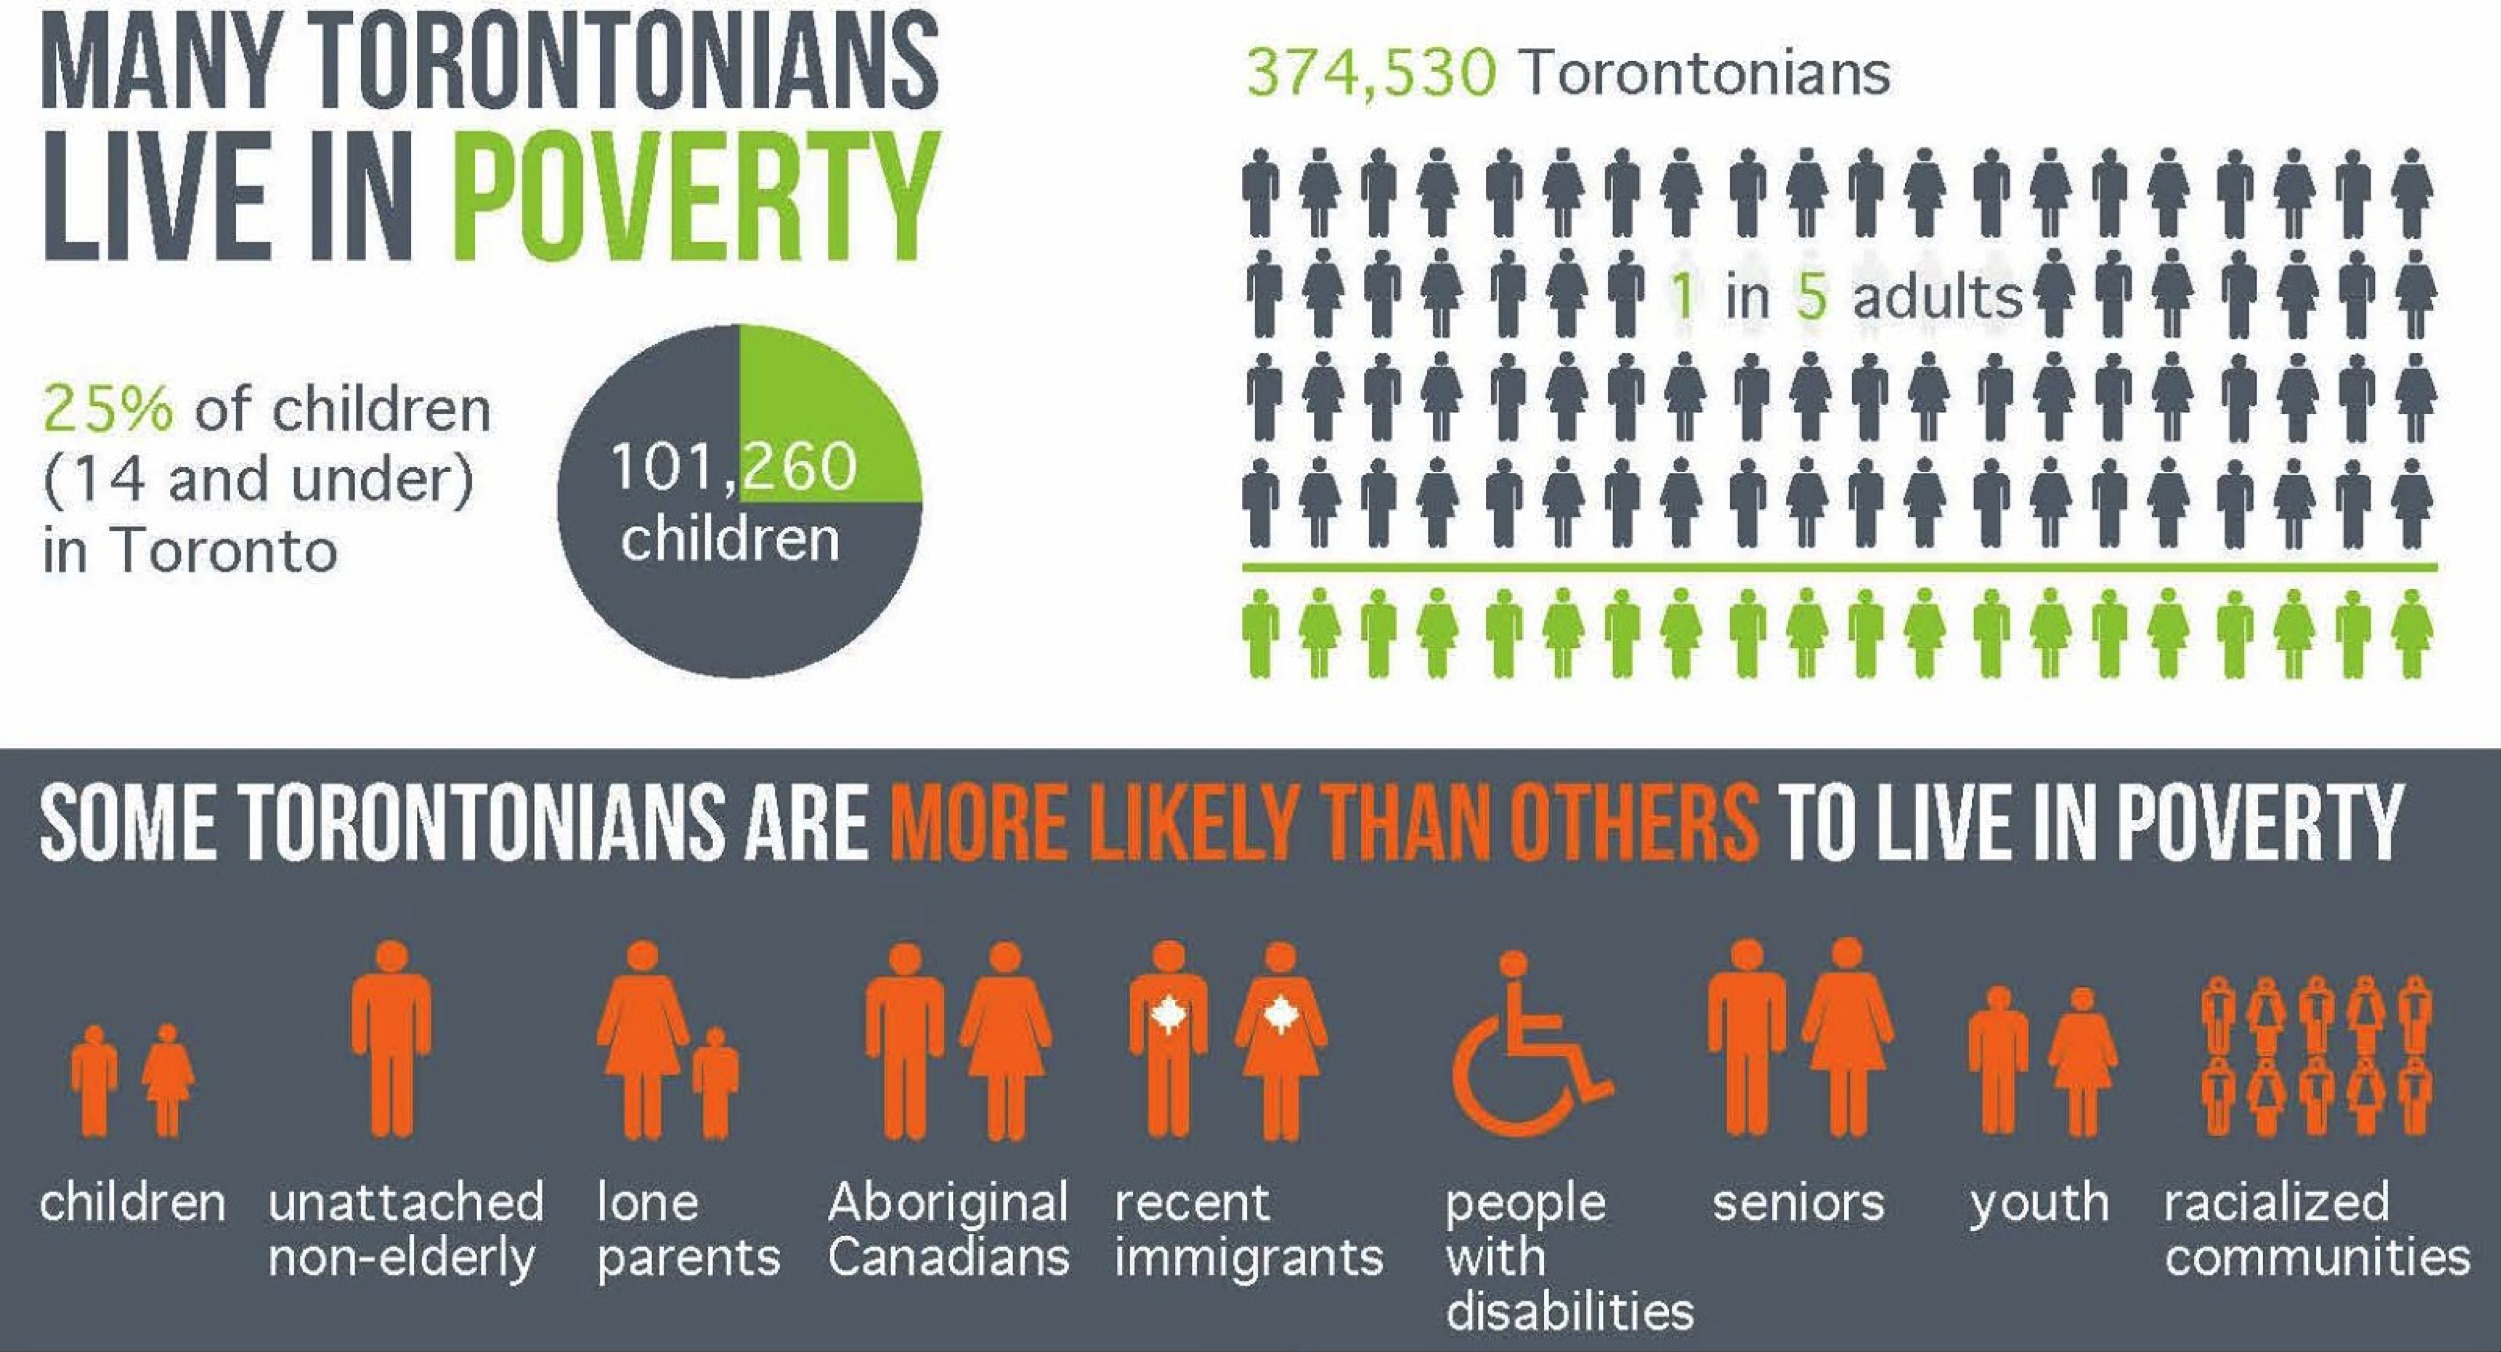 Many Torontonians live in poverty